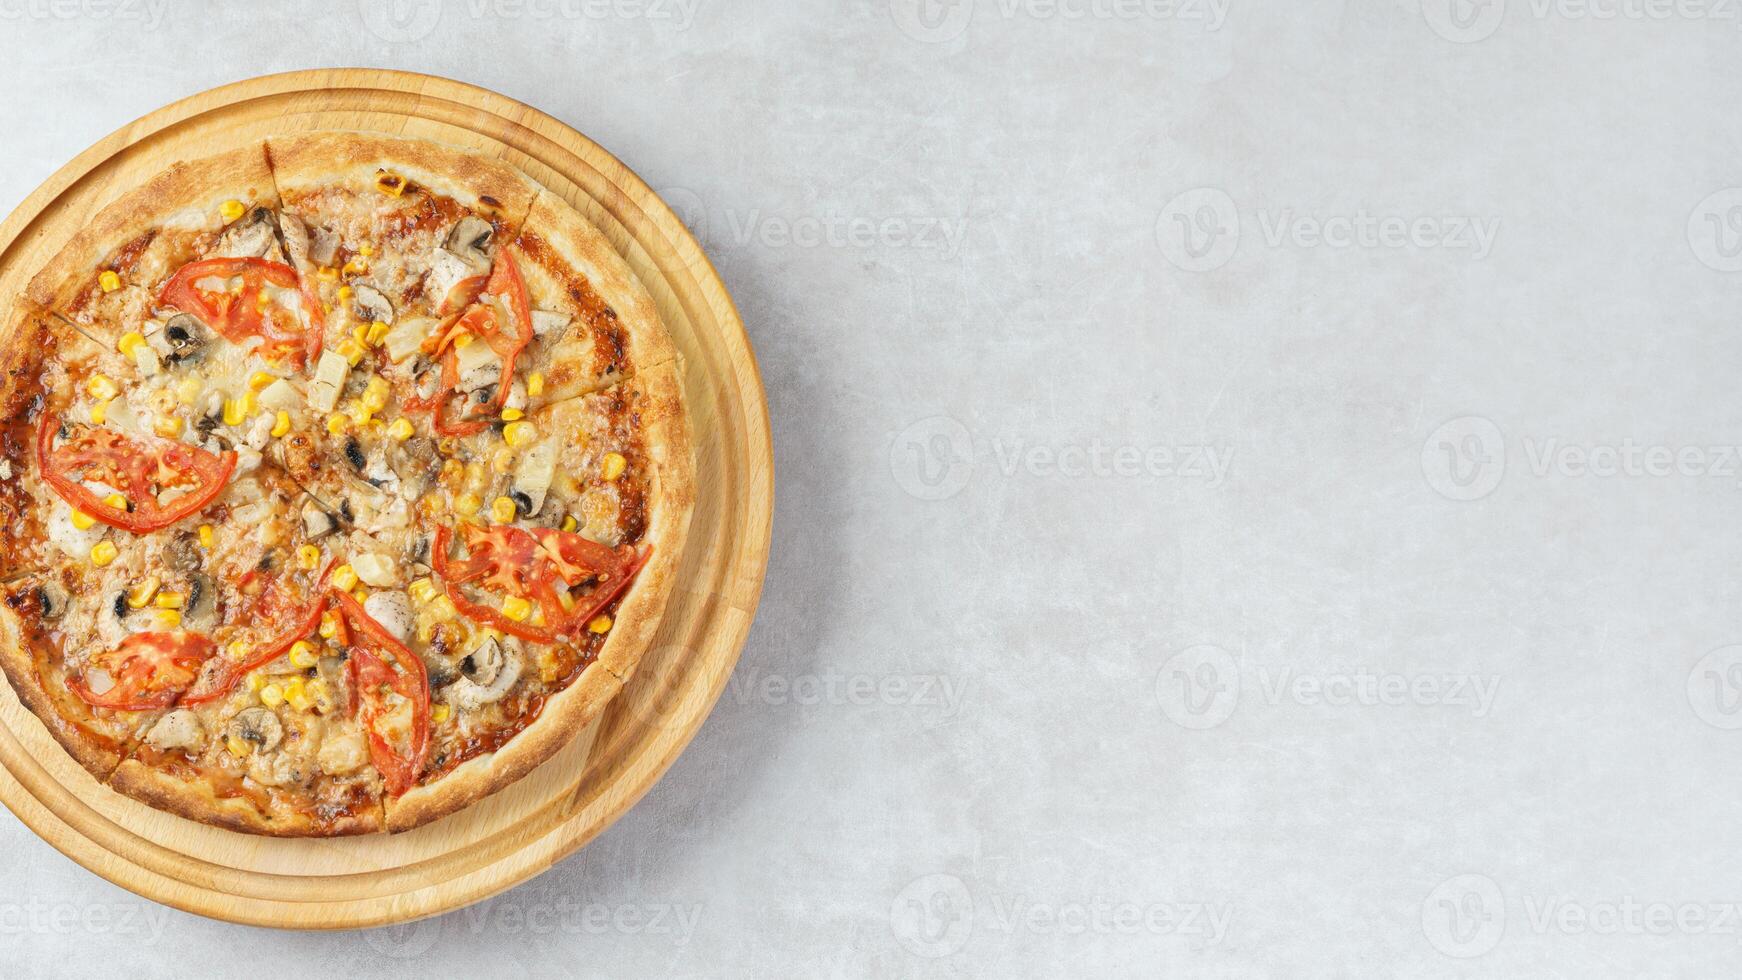 italiano pizza com derretido mozzarella queijo cogumelos, milho e tomate em branco pedra fundo. foto